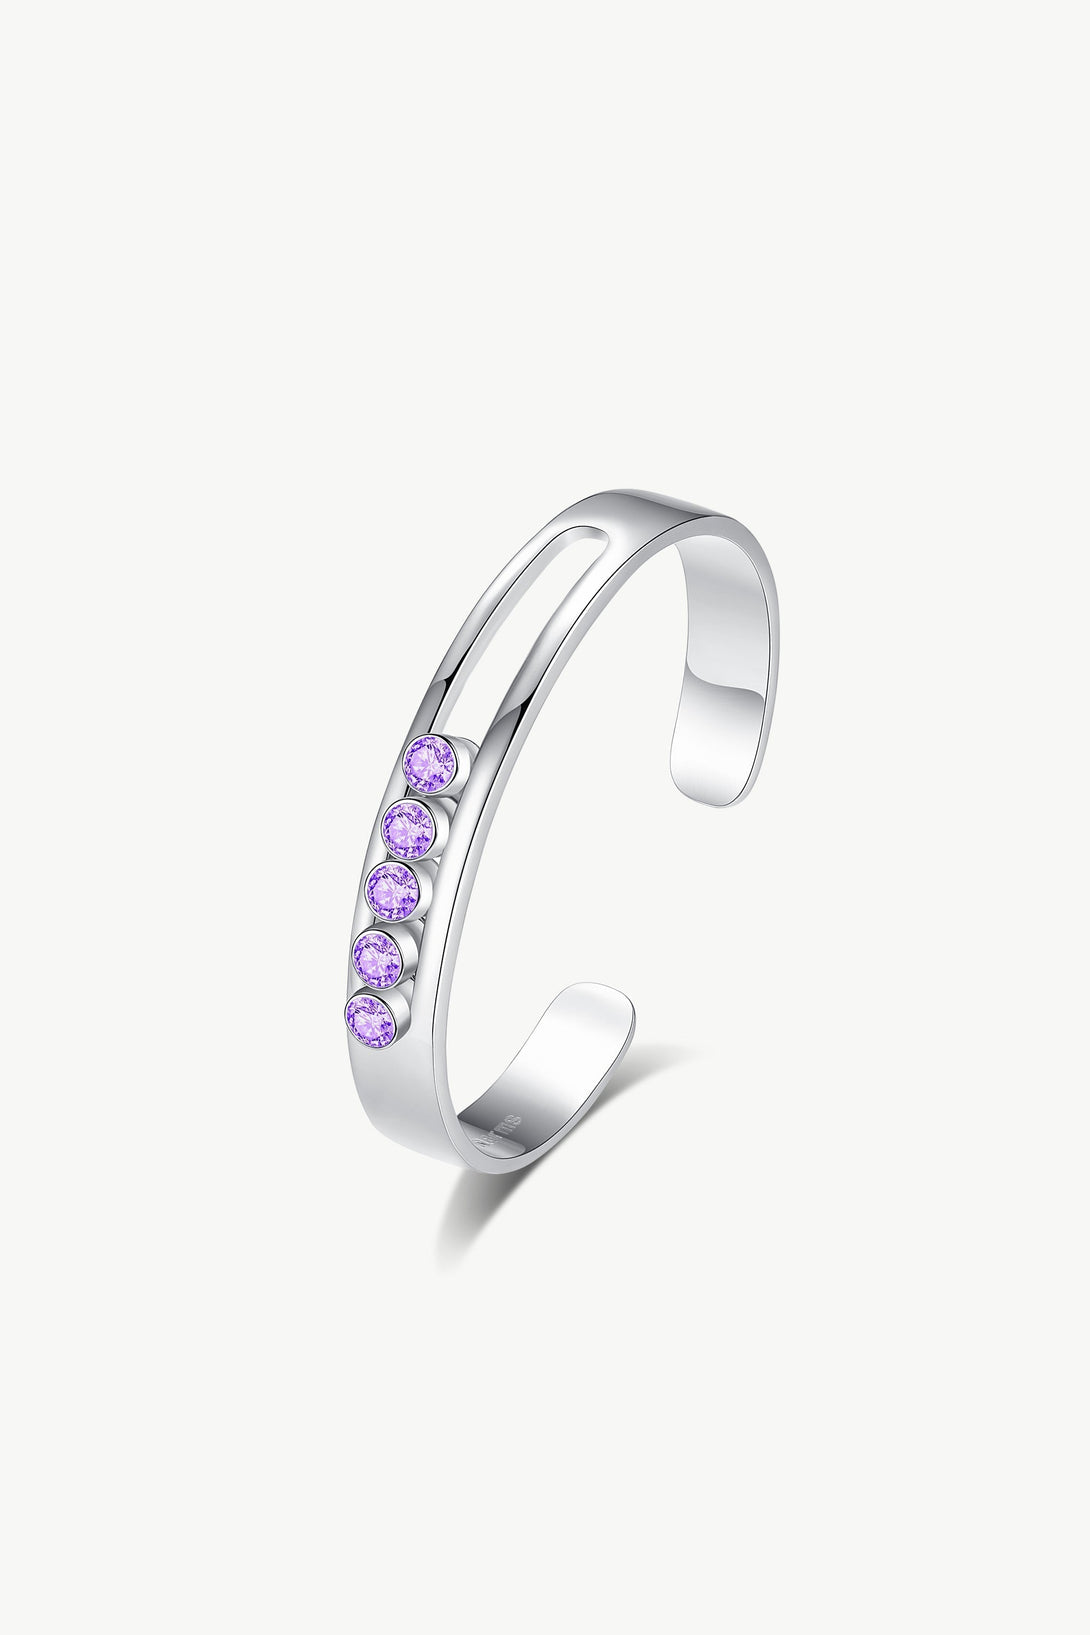 Audrey Silver Twinkling Purple Zirconia Half Crescent Bangle Bracelet - Classicharms